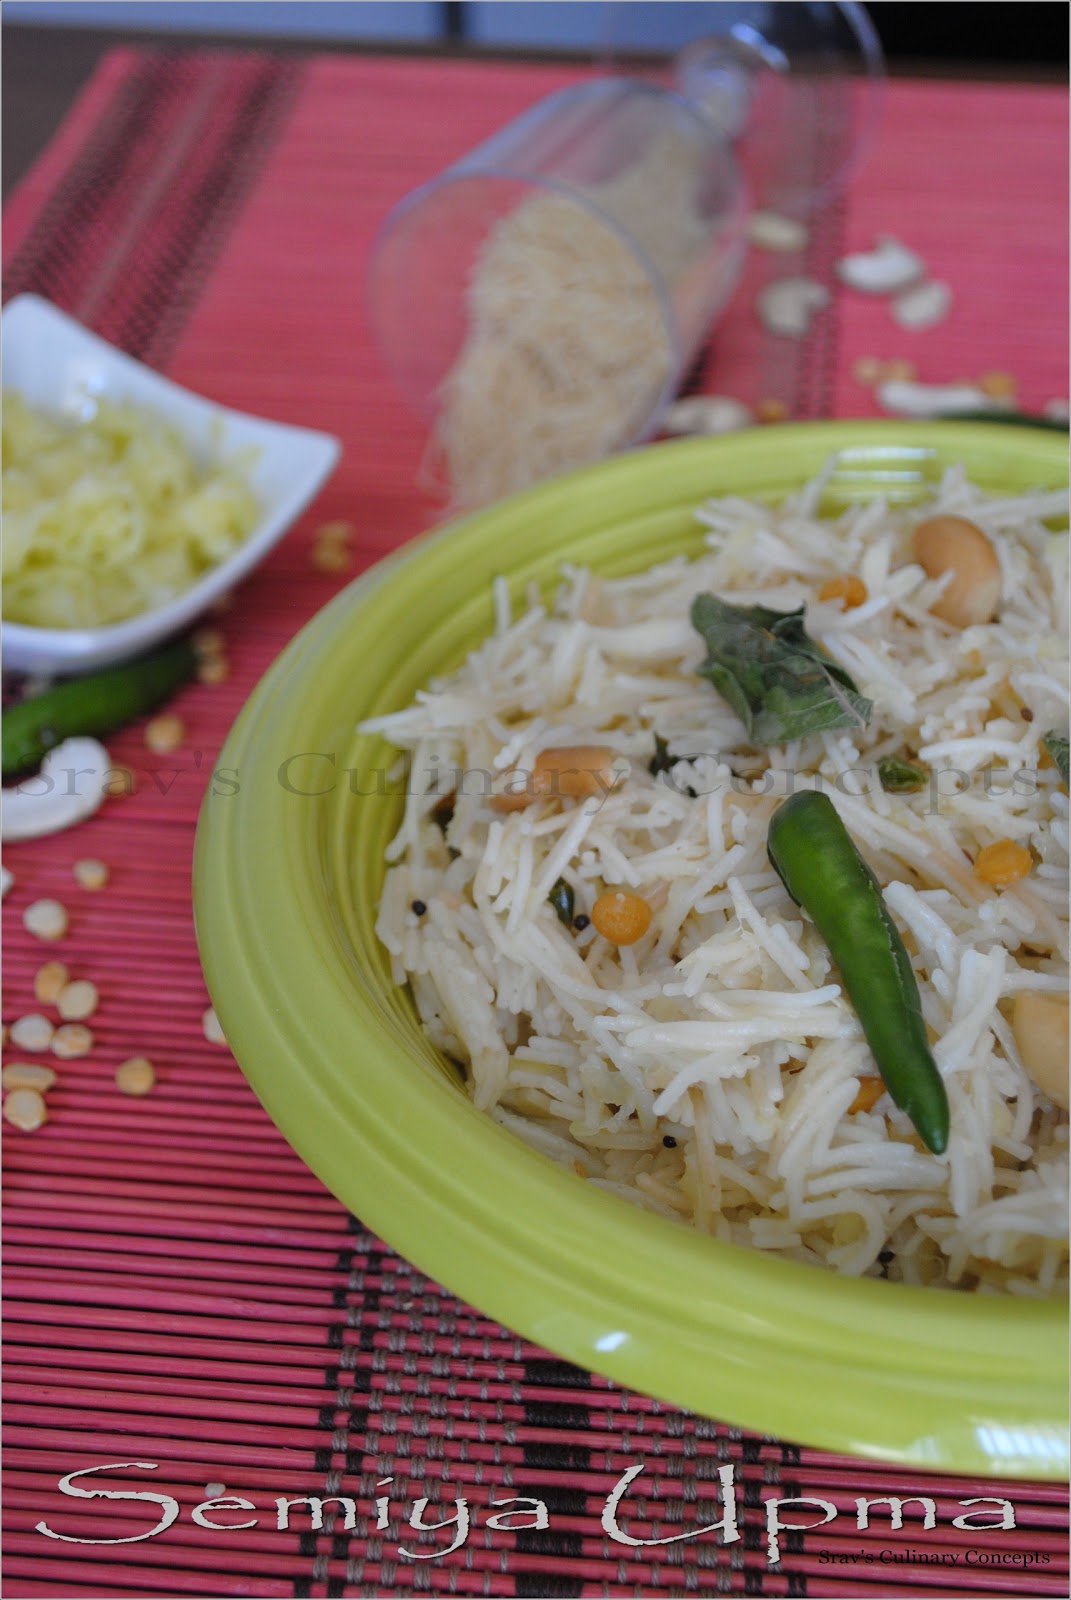 Srav's Culinary Concepts: Semiya Upma | Vermicelli Upma